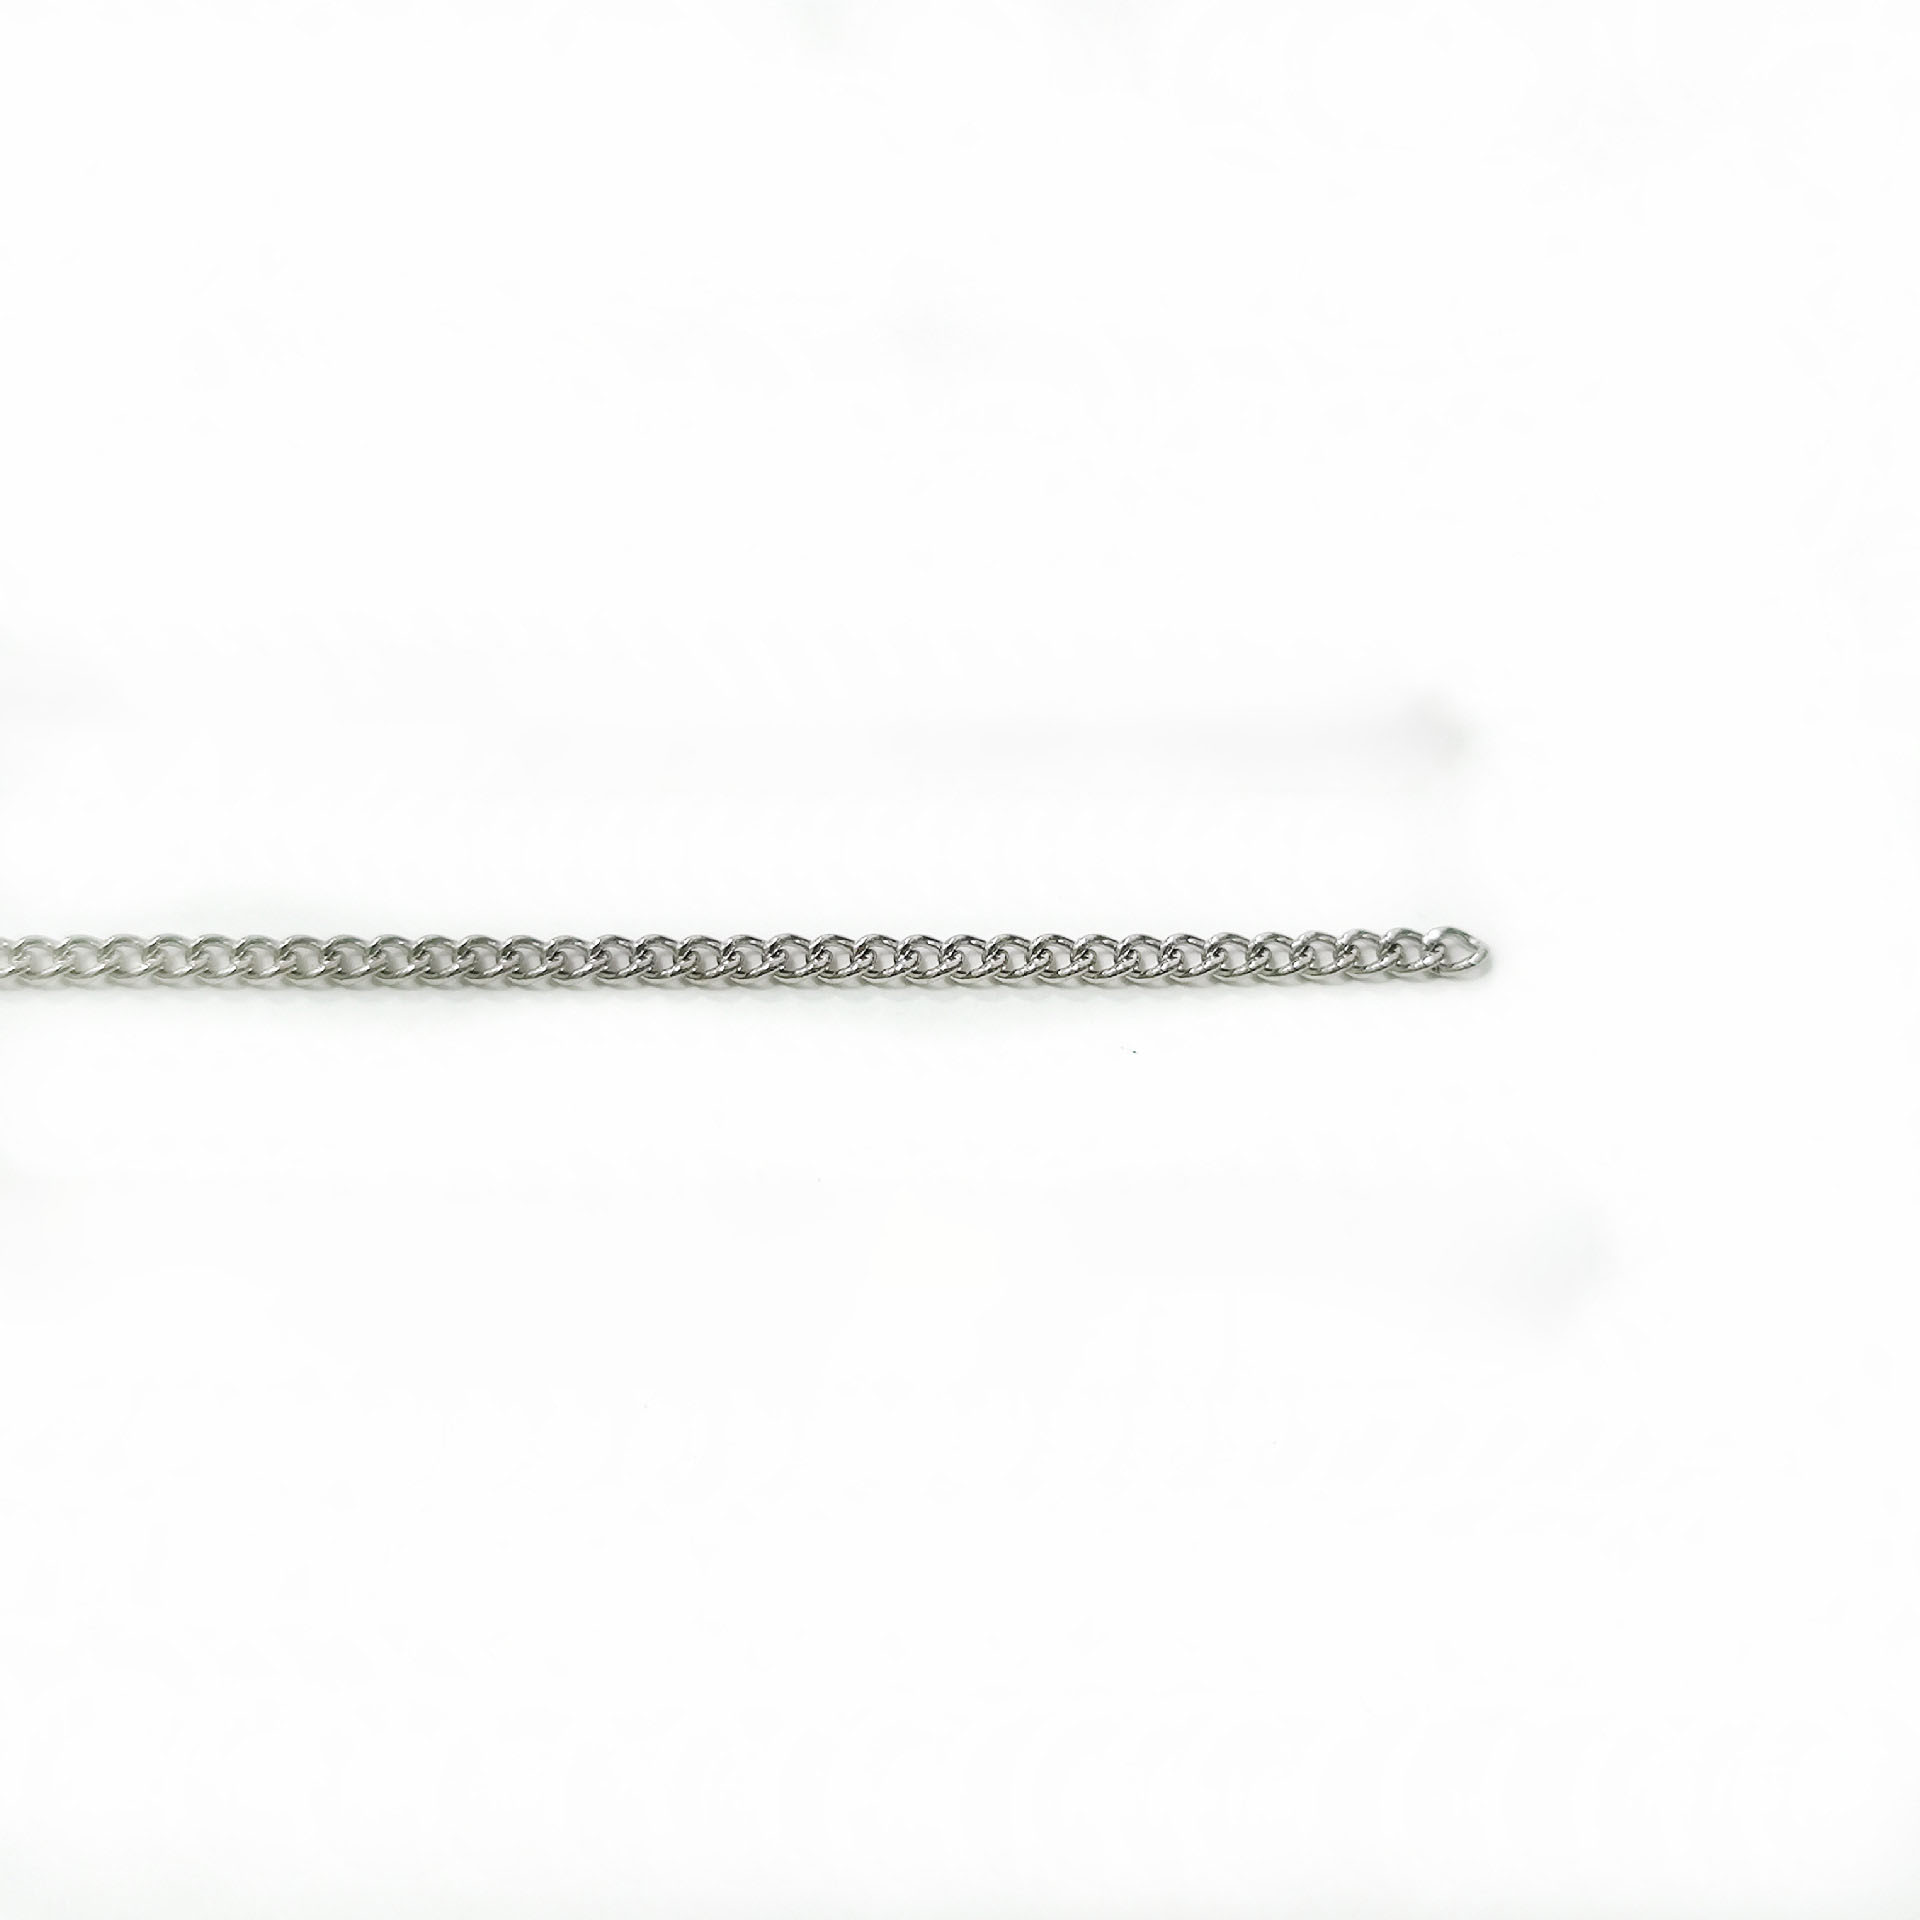 0.4 line*chain width 1.5mm, steel color